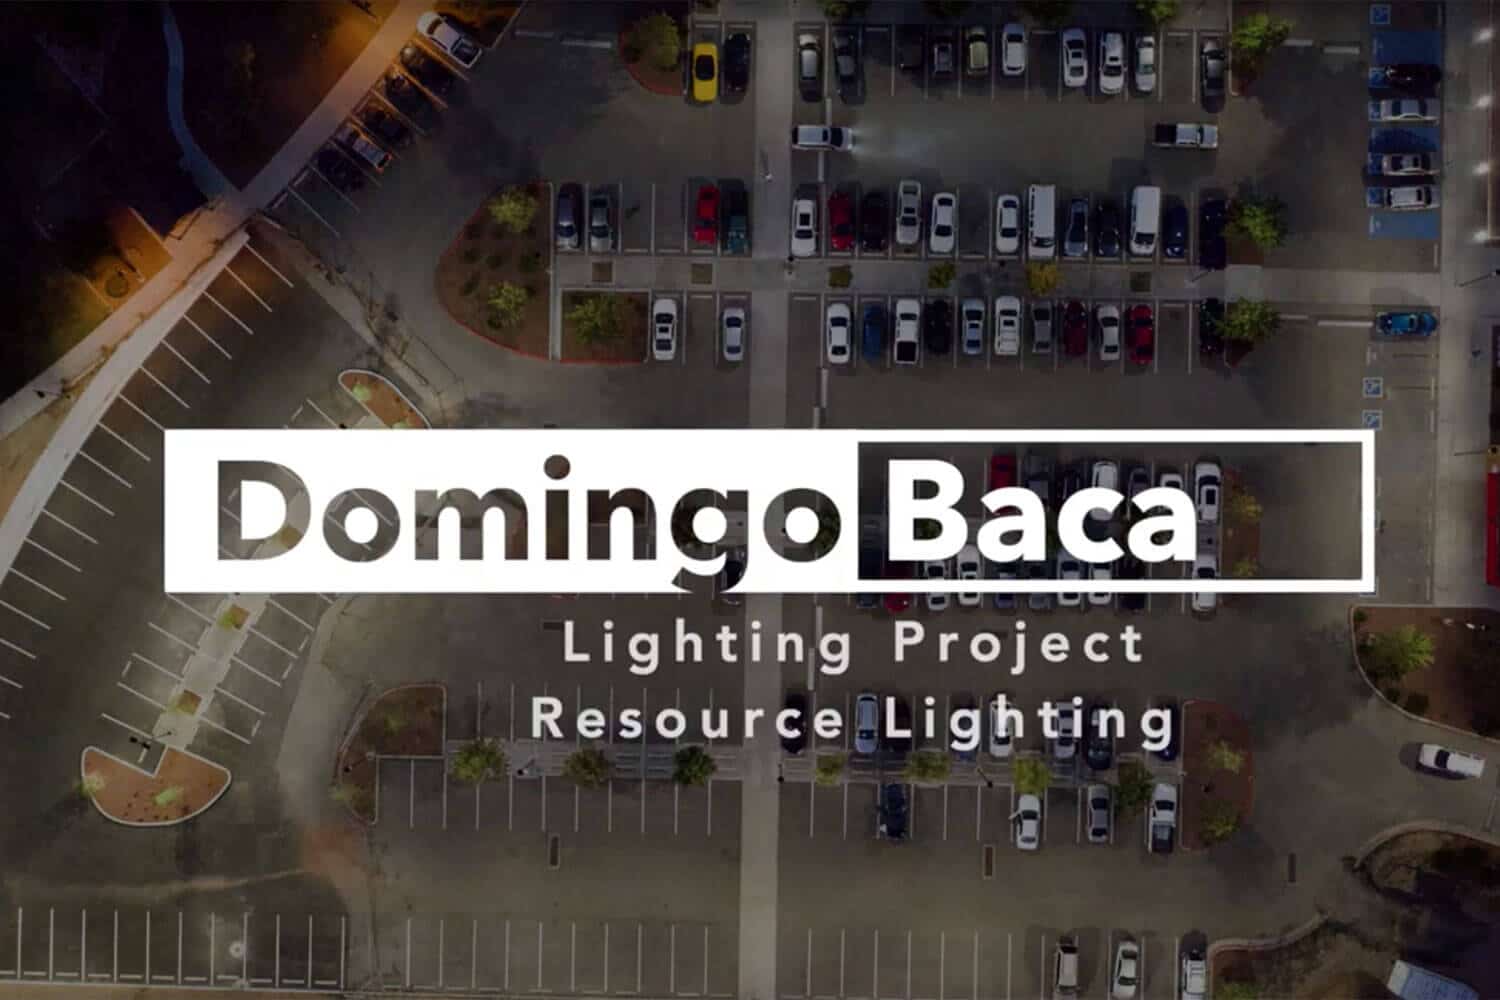 Drone image of Domingo Baca parking area